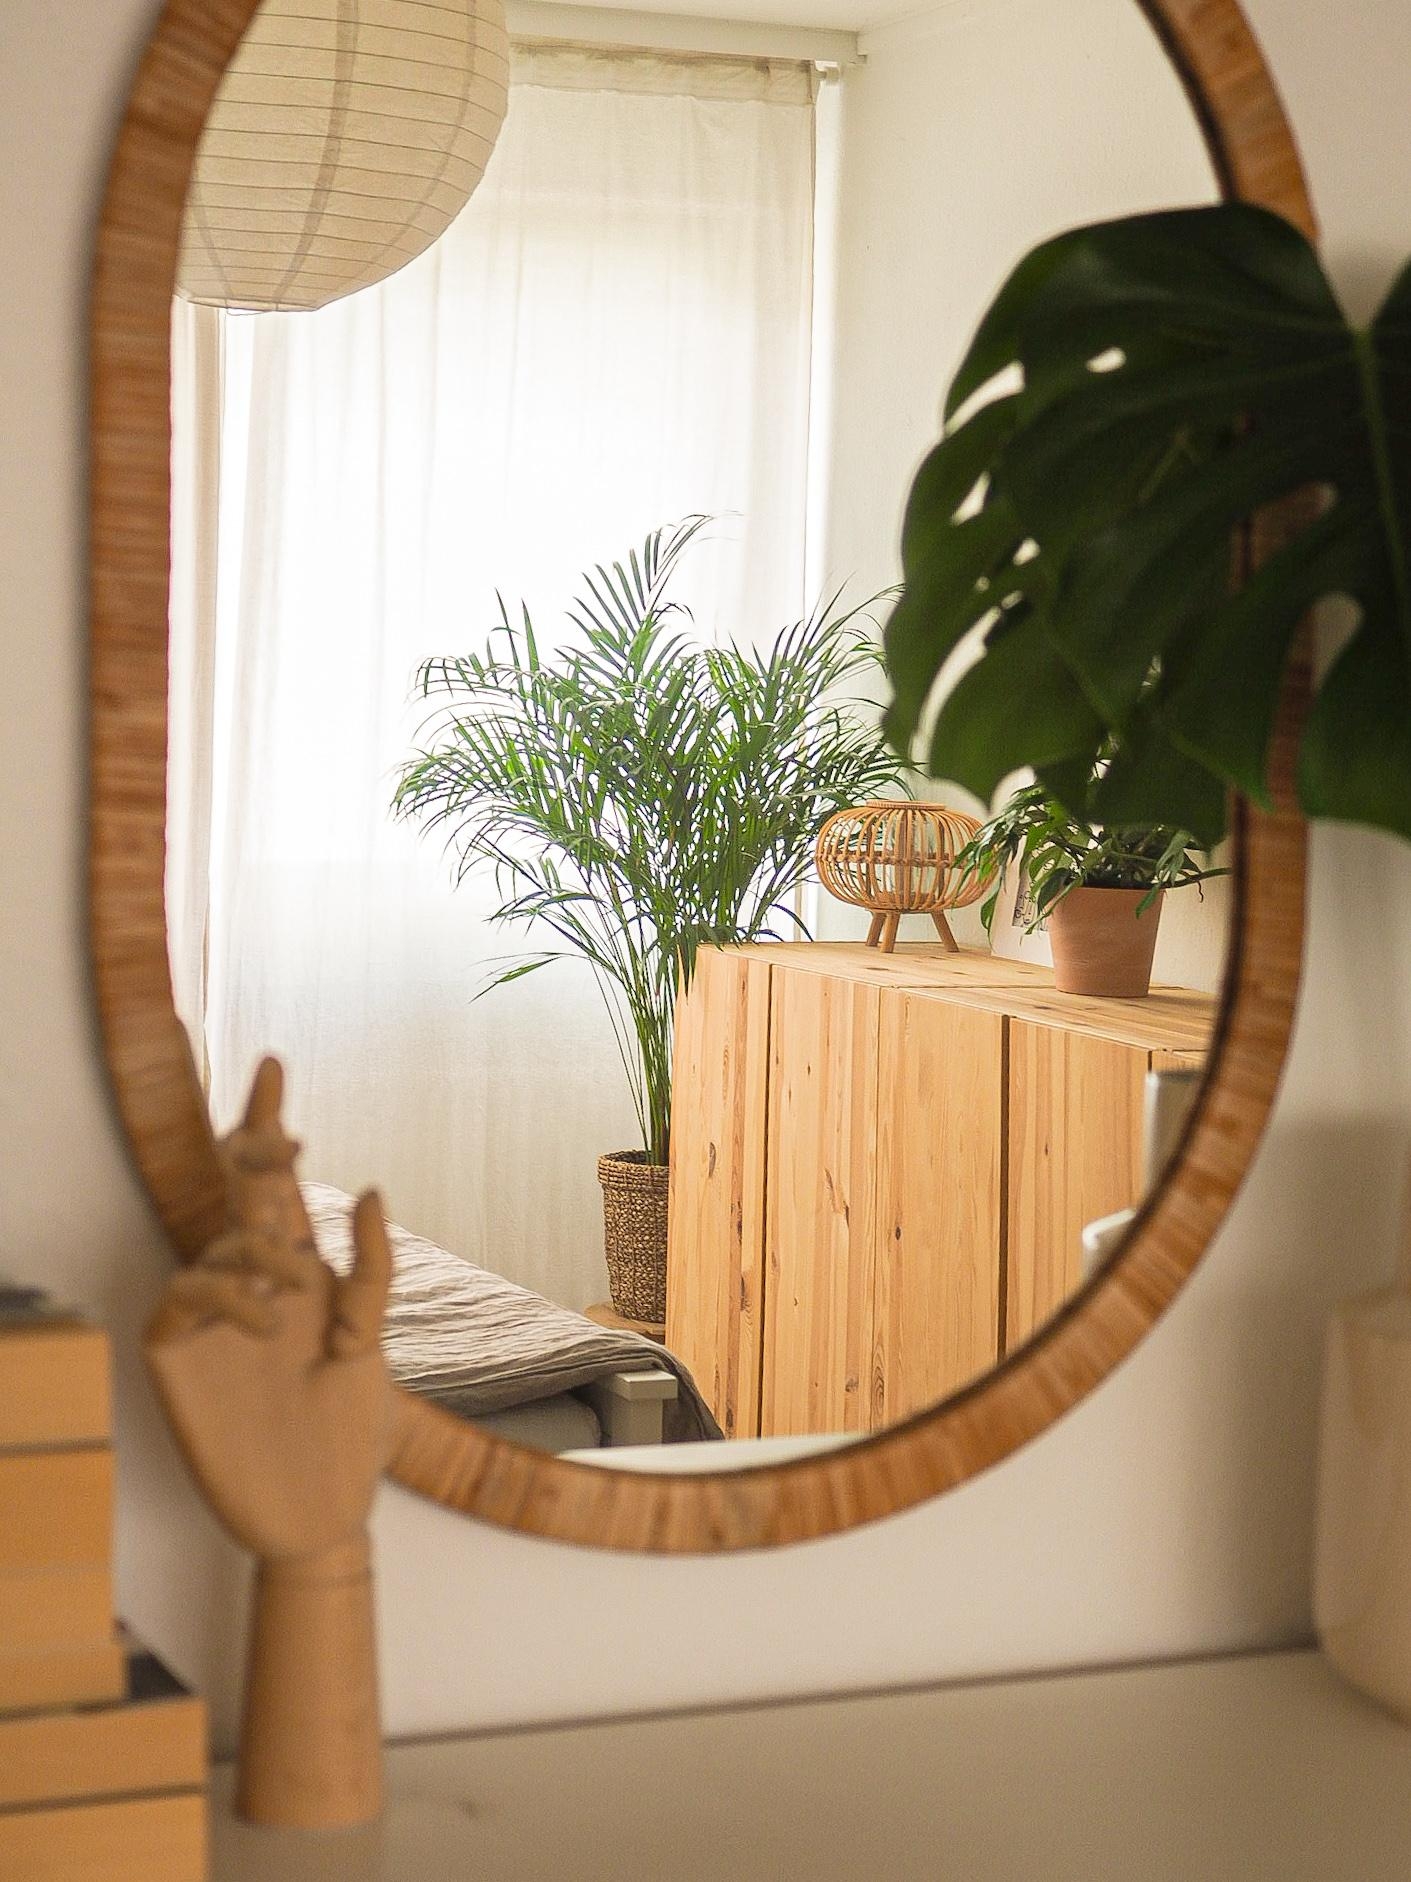 New perspective.
#bedroom #mybedroom #bedroomdecor #schlafzimmerinspo #grünundholz #scandihome 